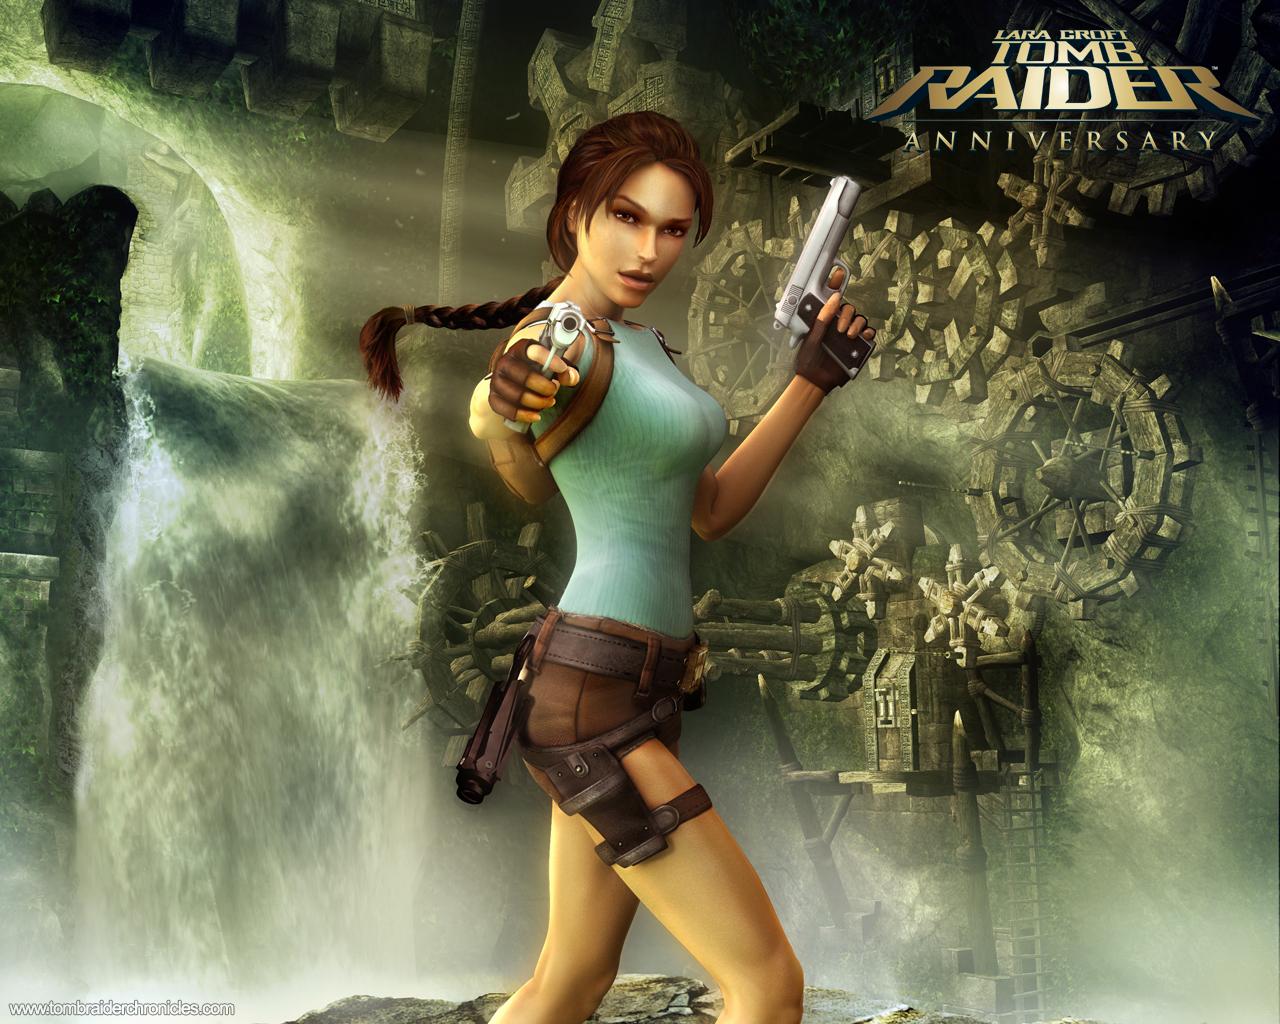 Download HQ Tomb Raider Anniversary wallpaper / Games / 1280x1024